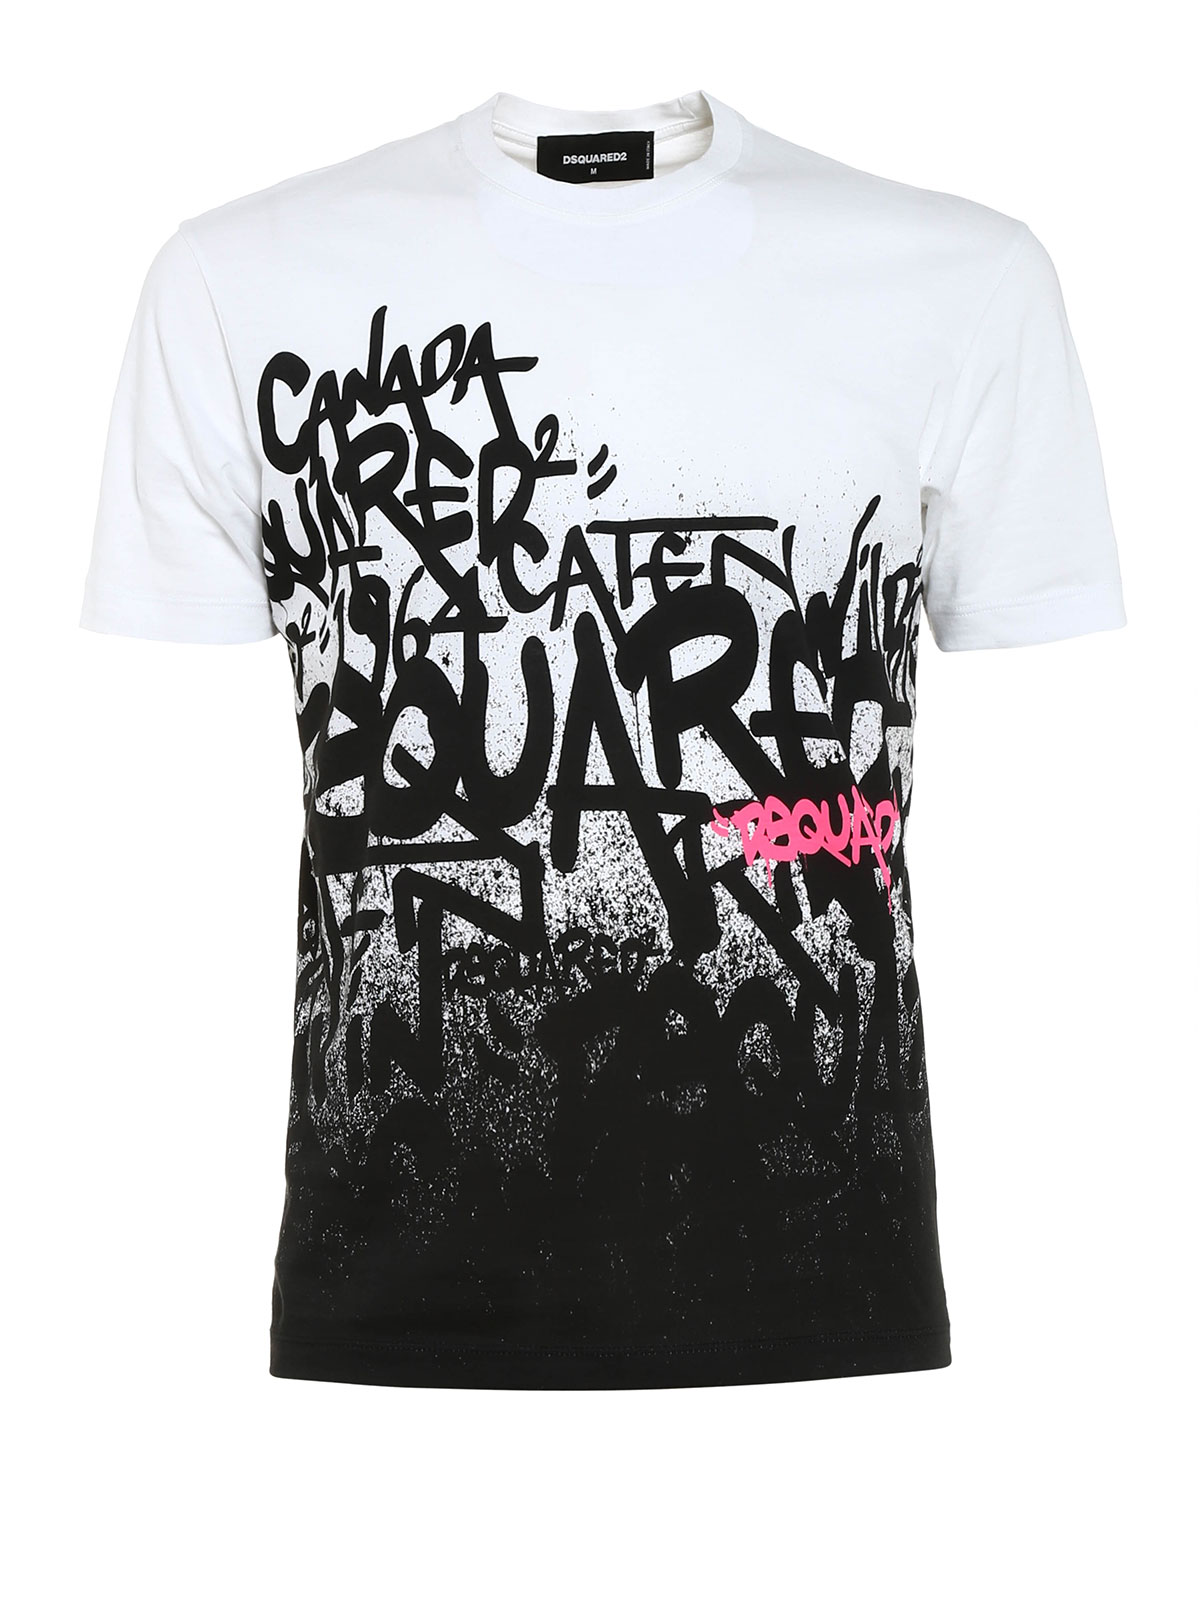 dsquared t shirt graffiti